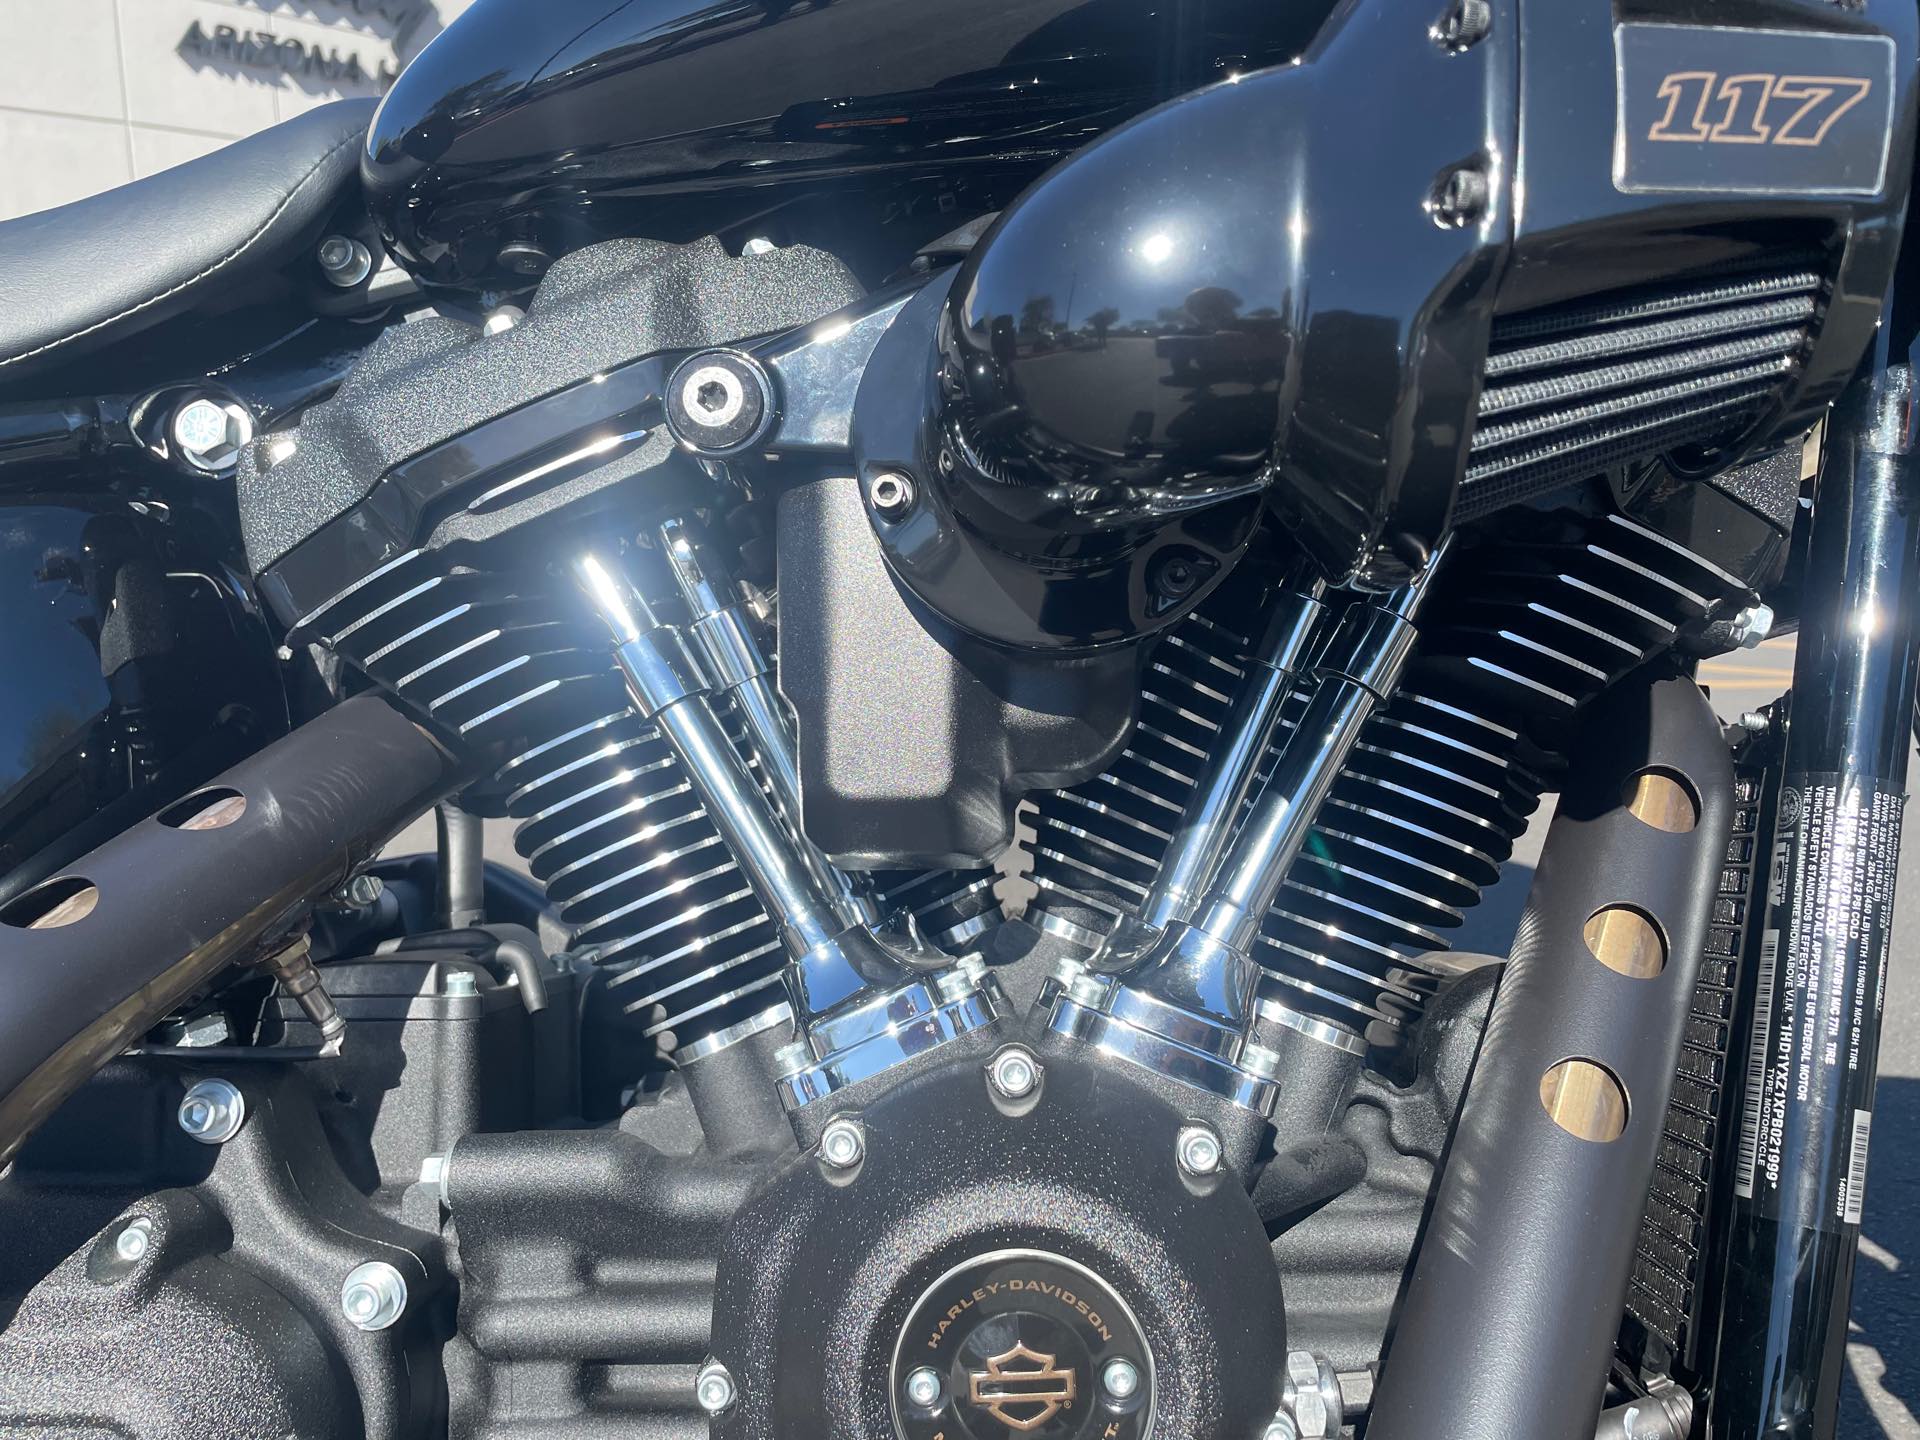 2023 Harley-Davidson Softail Low Rider ST at Buddy Stubbs Arizona Harley-Davidson